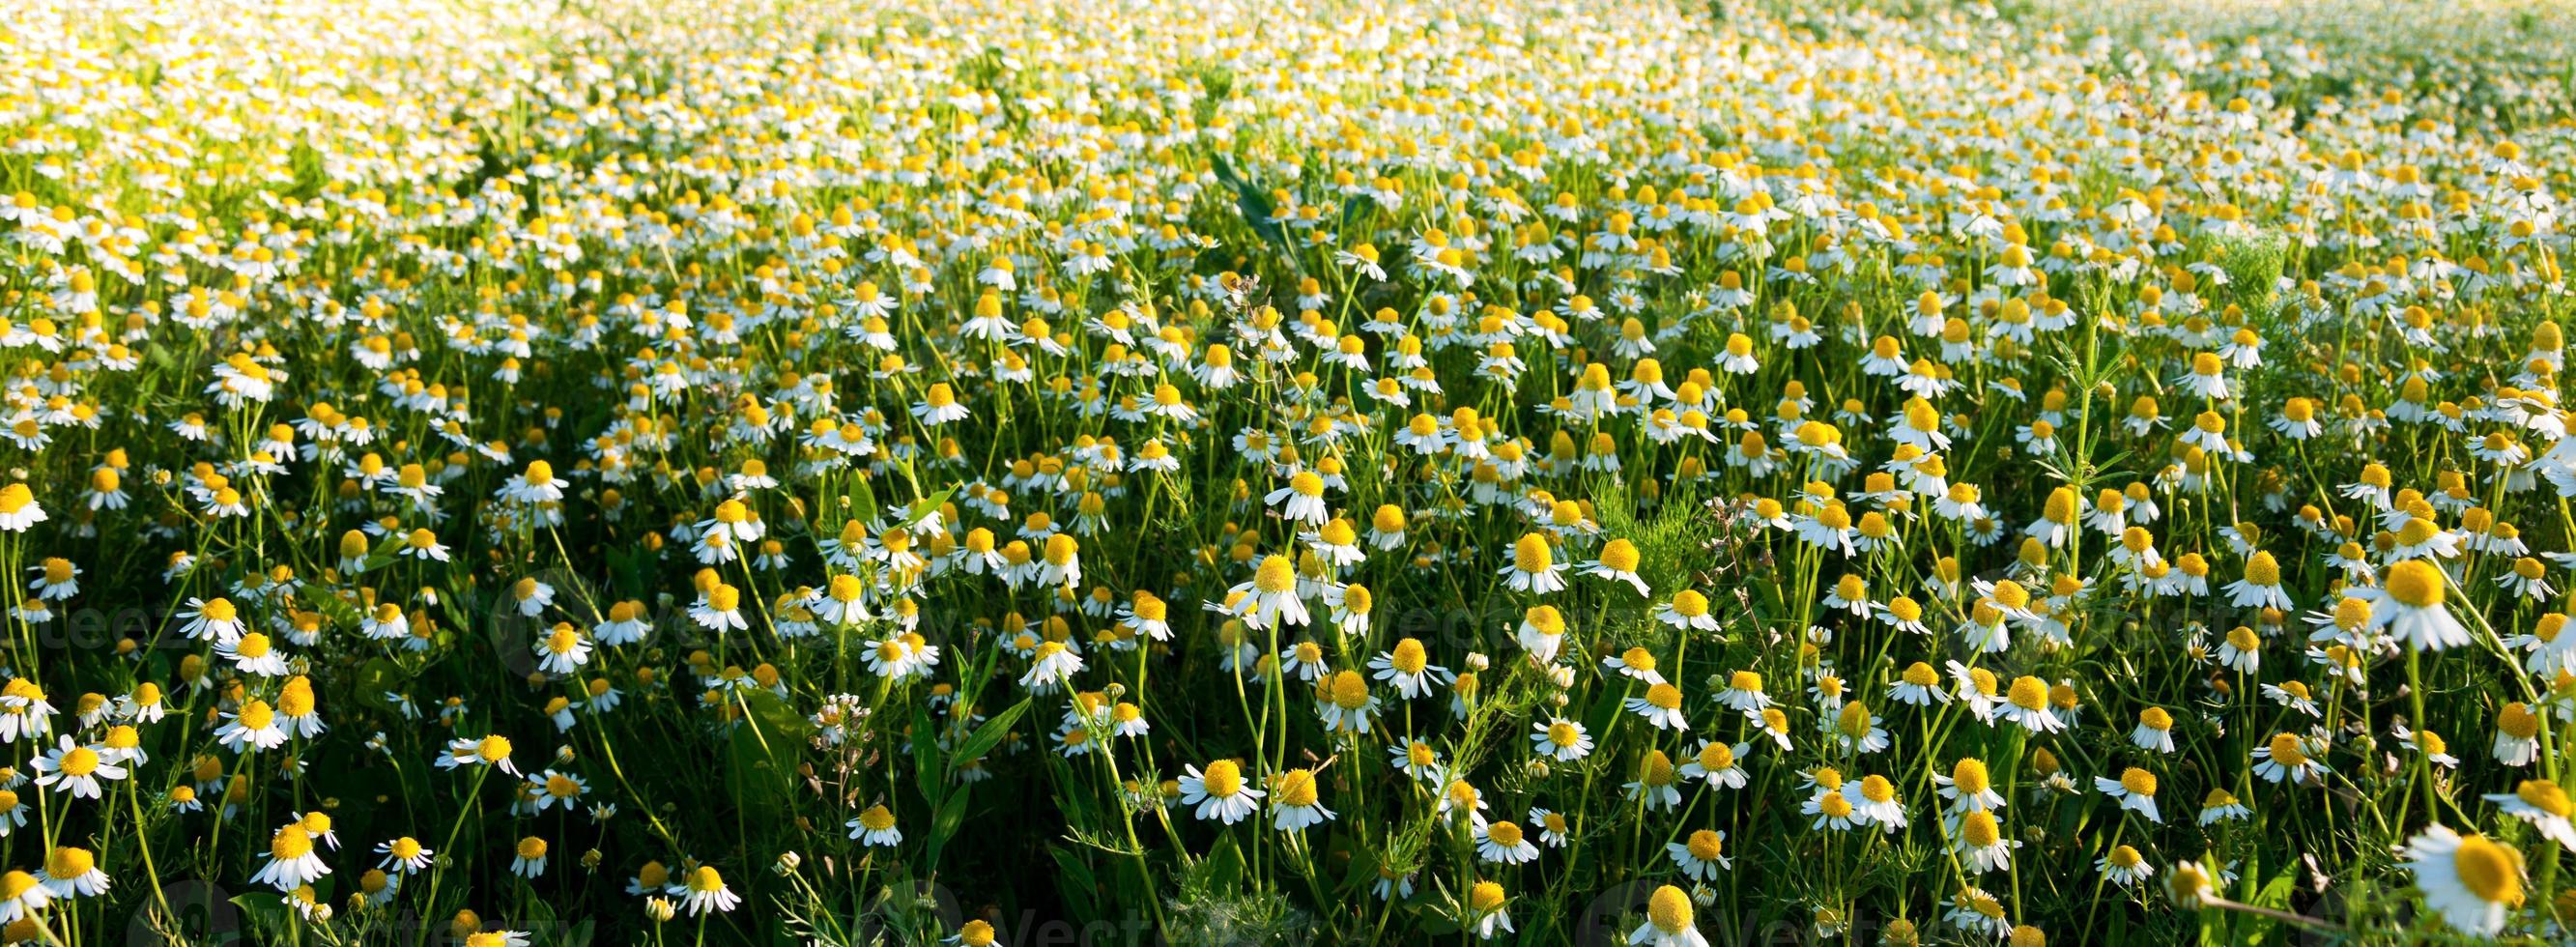 campo de flores de camomila. textura de flor foto